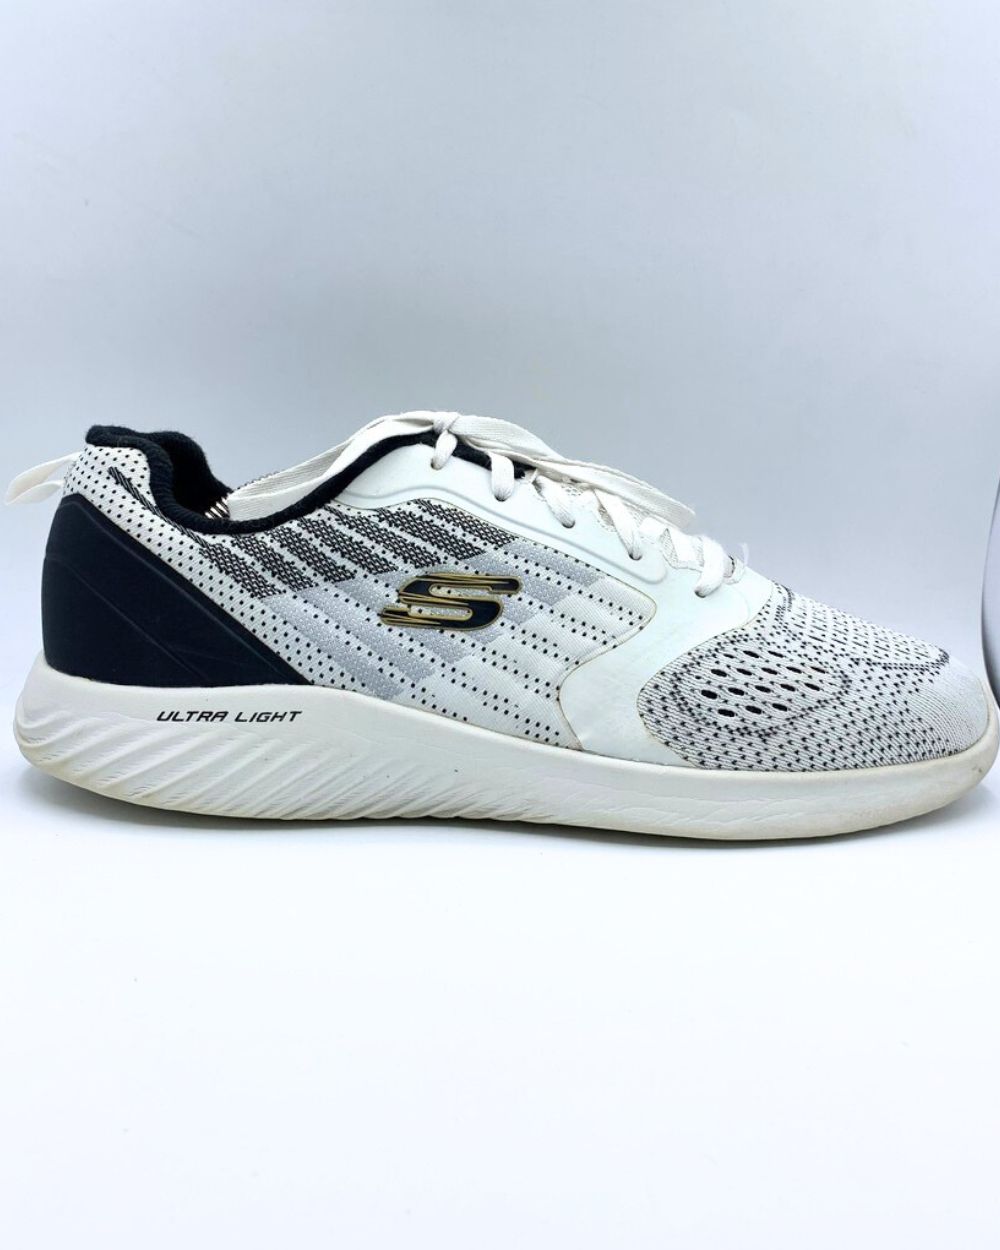 Skechers Ultra Light  Original Brand Sports Gary Running Shoes For Men